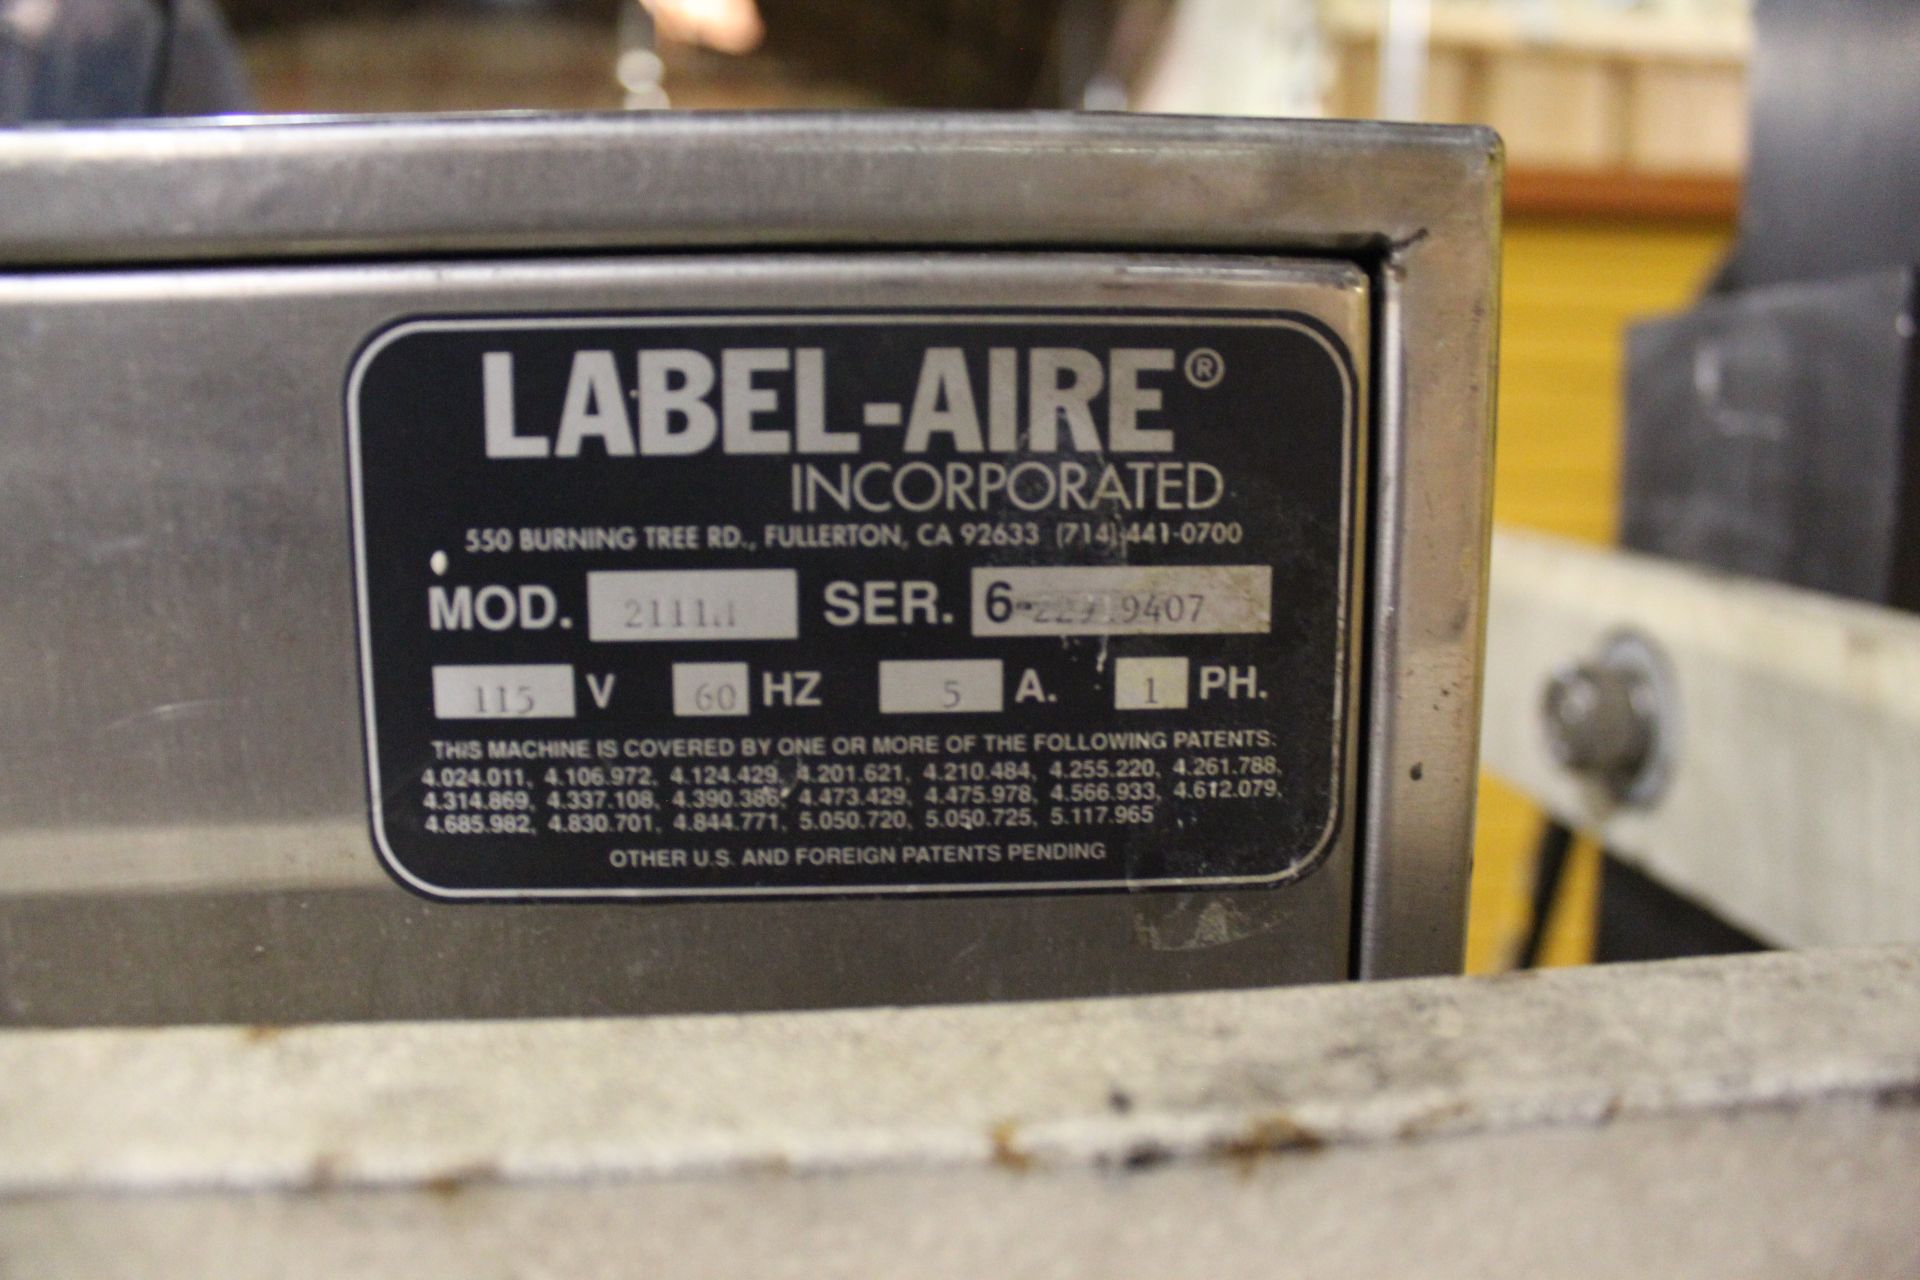 Label-Aire Pressure Sensitive Label Applicator, M# 2111H, S/N 6-229.9407 - Bild 2 aus 2